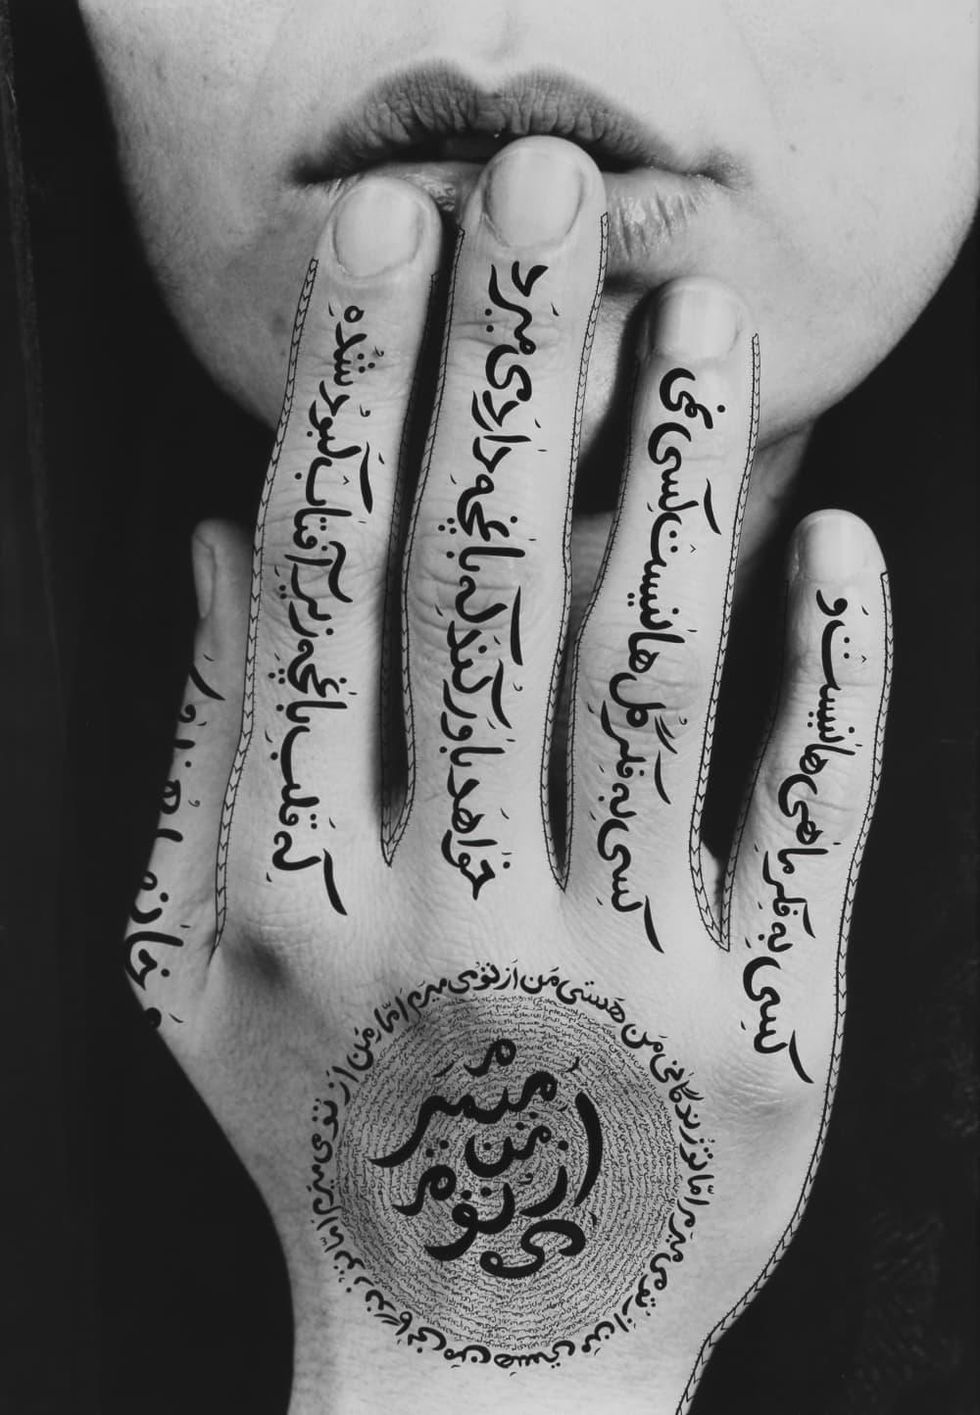 Shirin Neshat, "Untitled (Women of Allah)," 1996